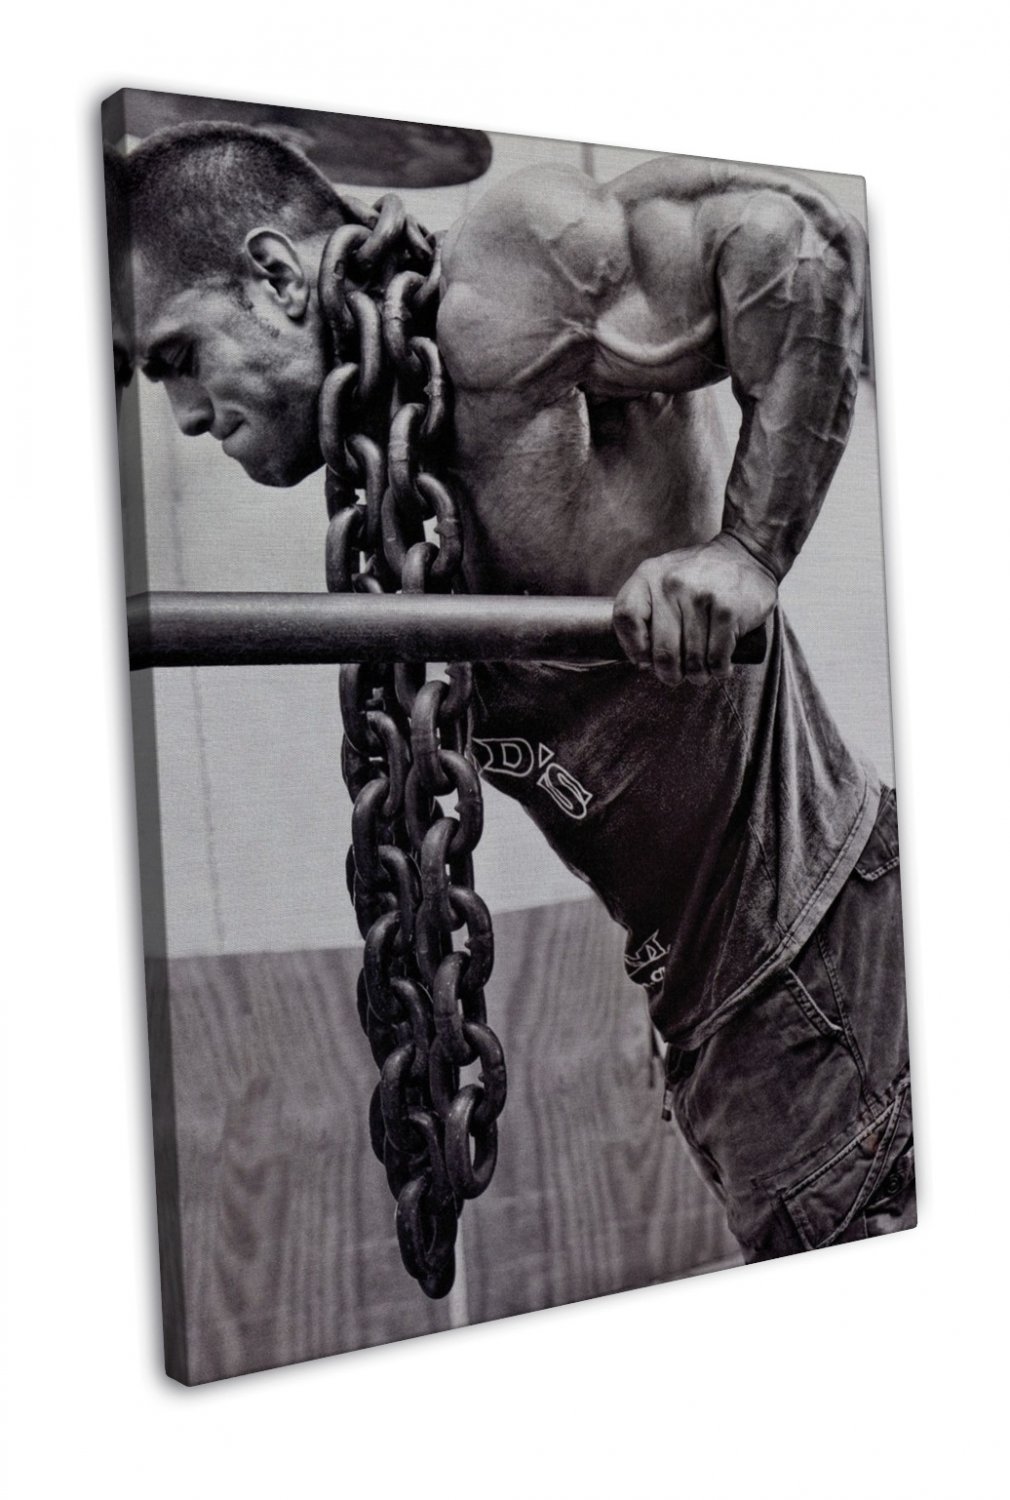 Bodybuilding Fitness Motivation 20x16 Framed Canvas Print Decor